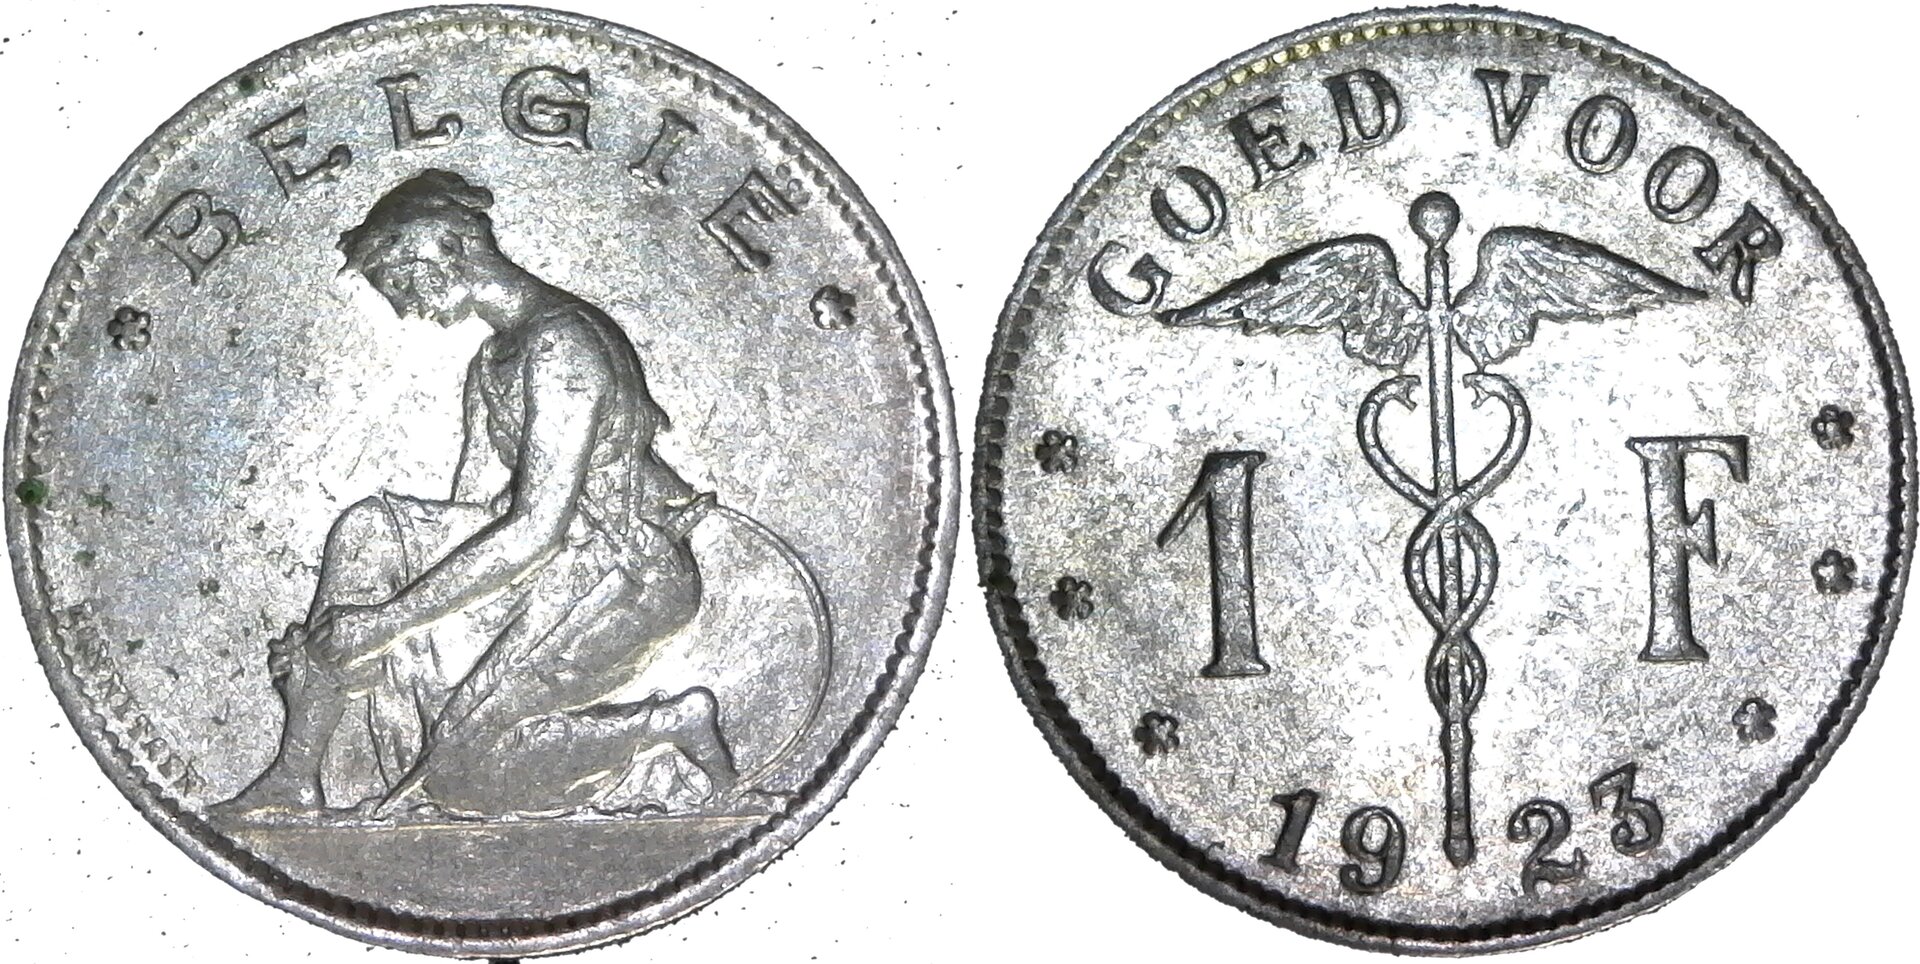 Belgium 1 Franc 1923 obv-side-cutout.jpg